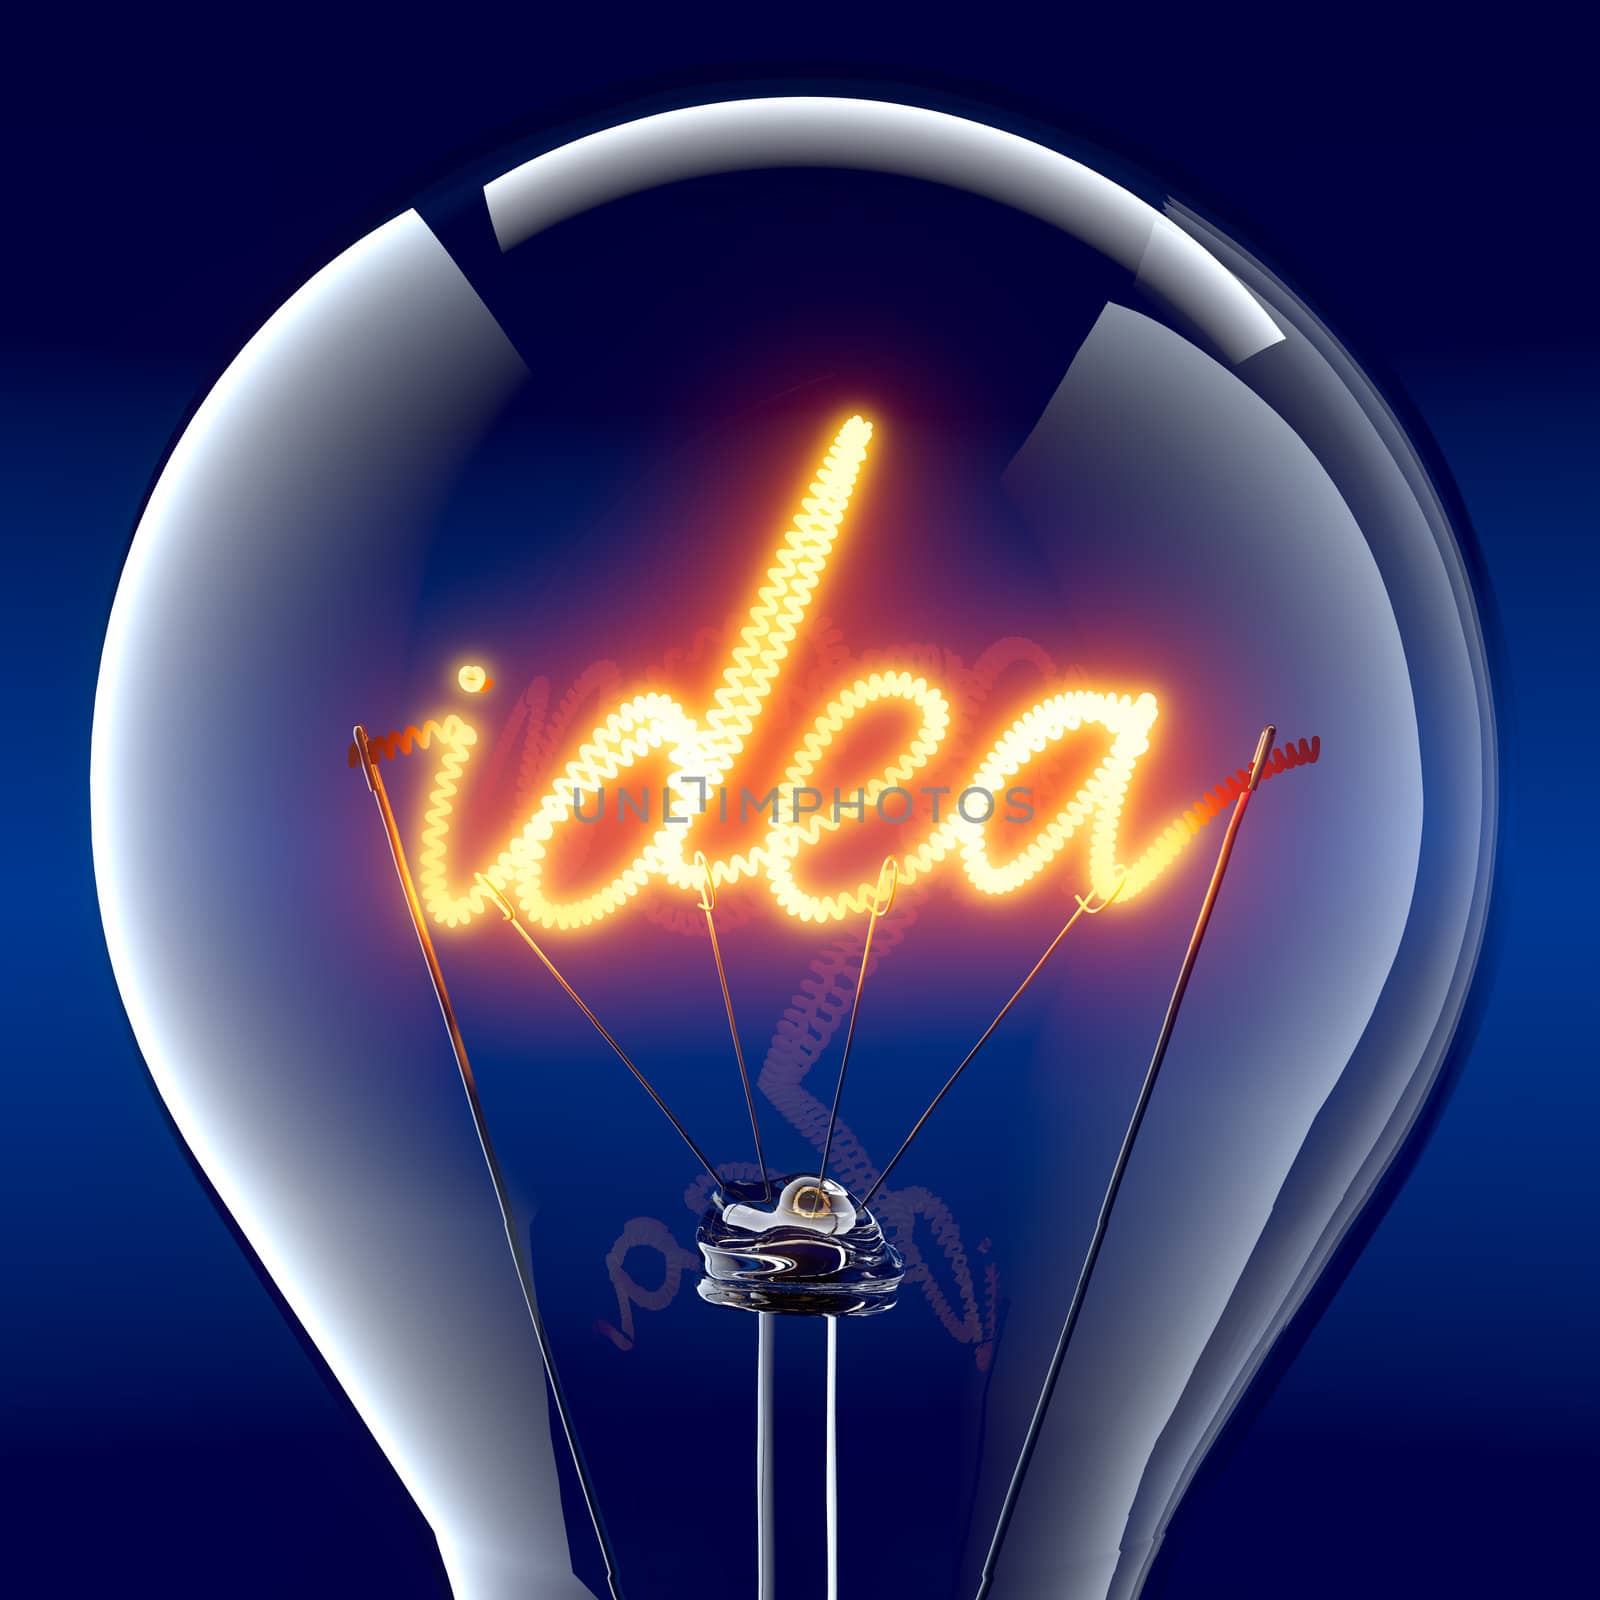 The word "idea" light bulb inside by Antartis